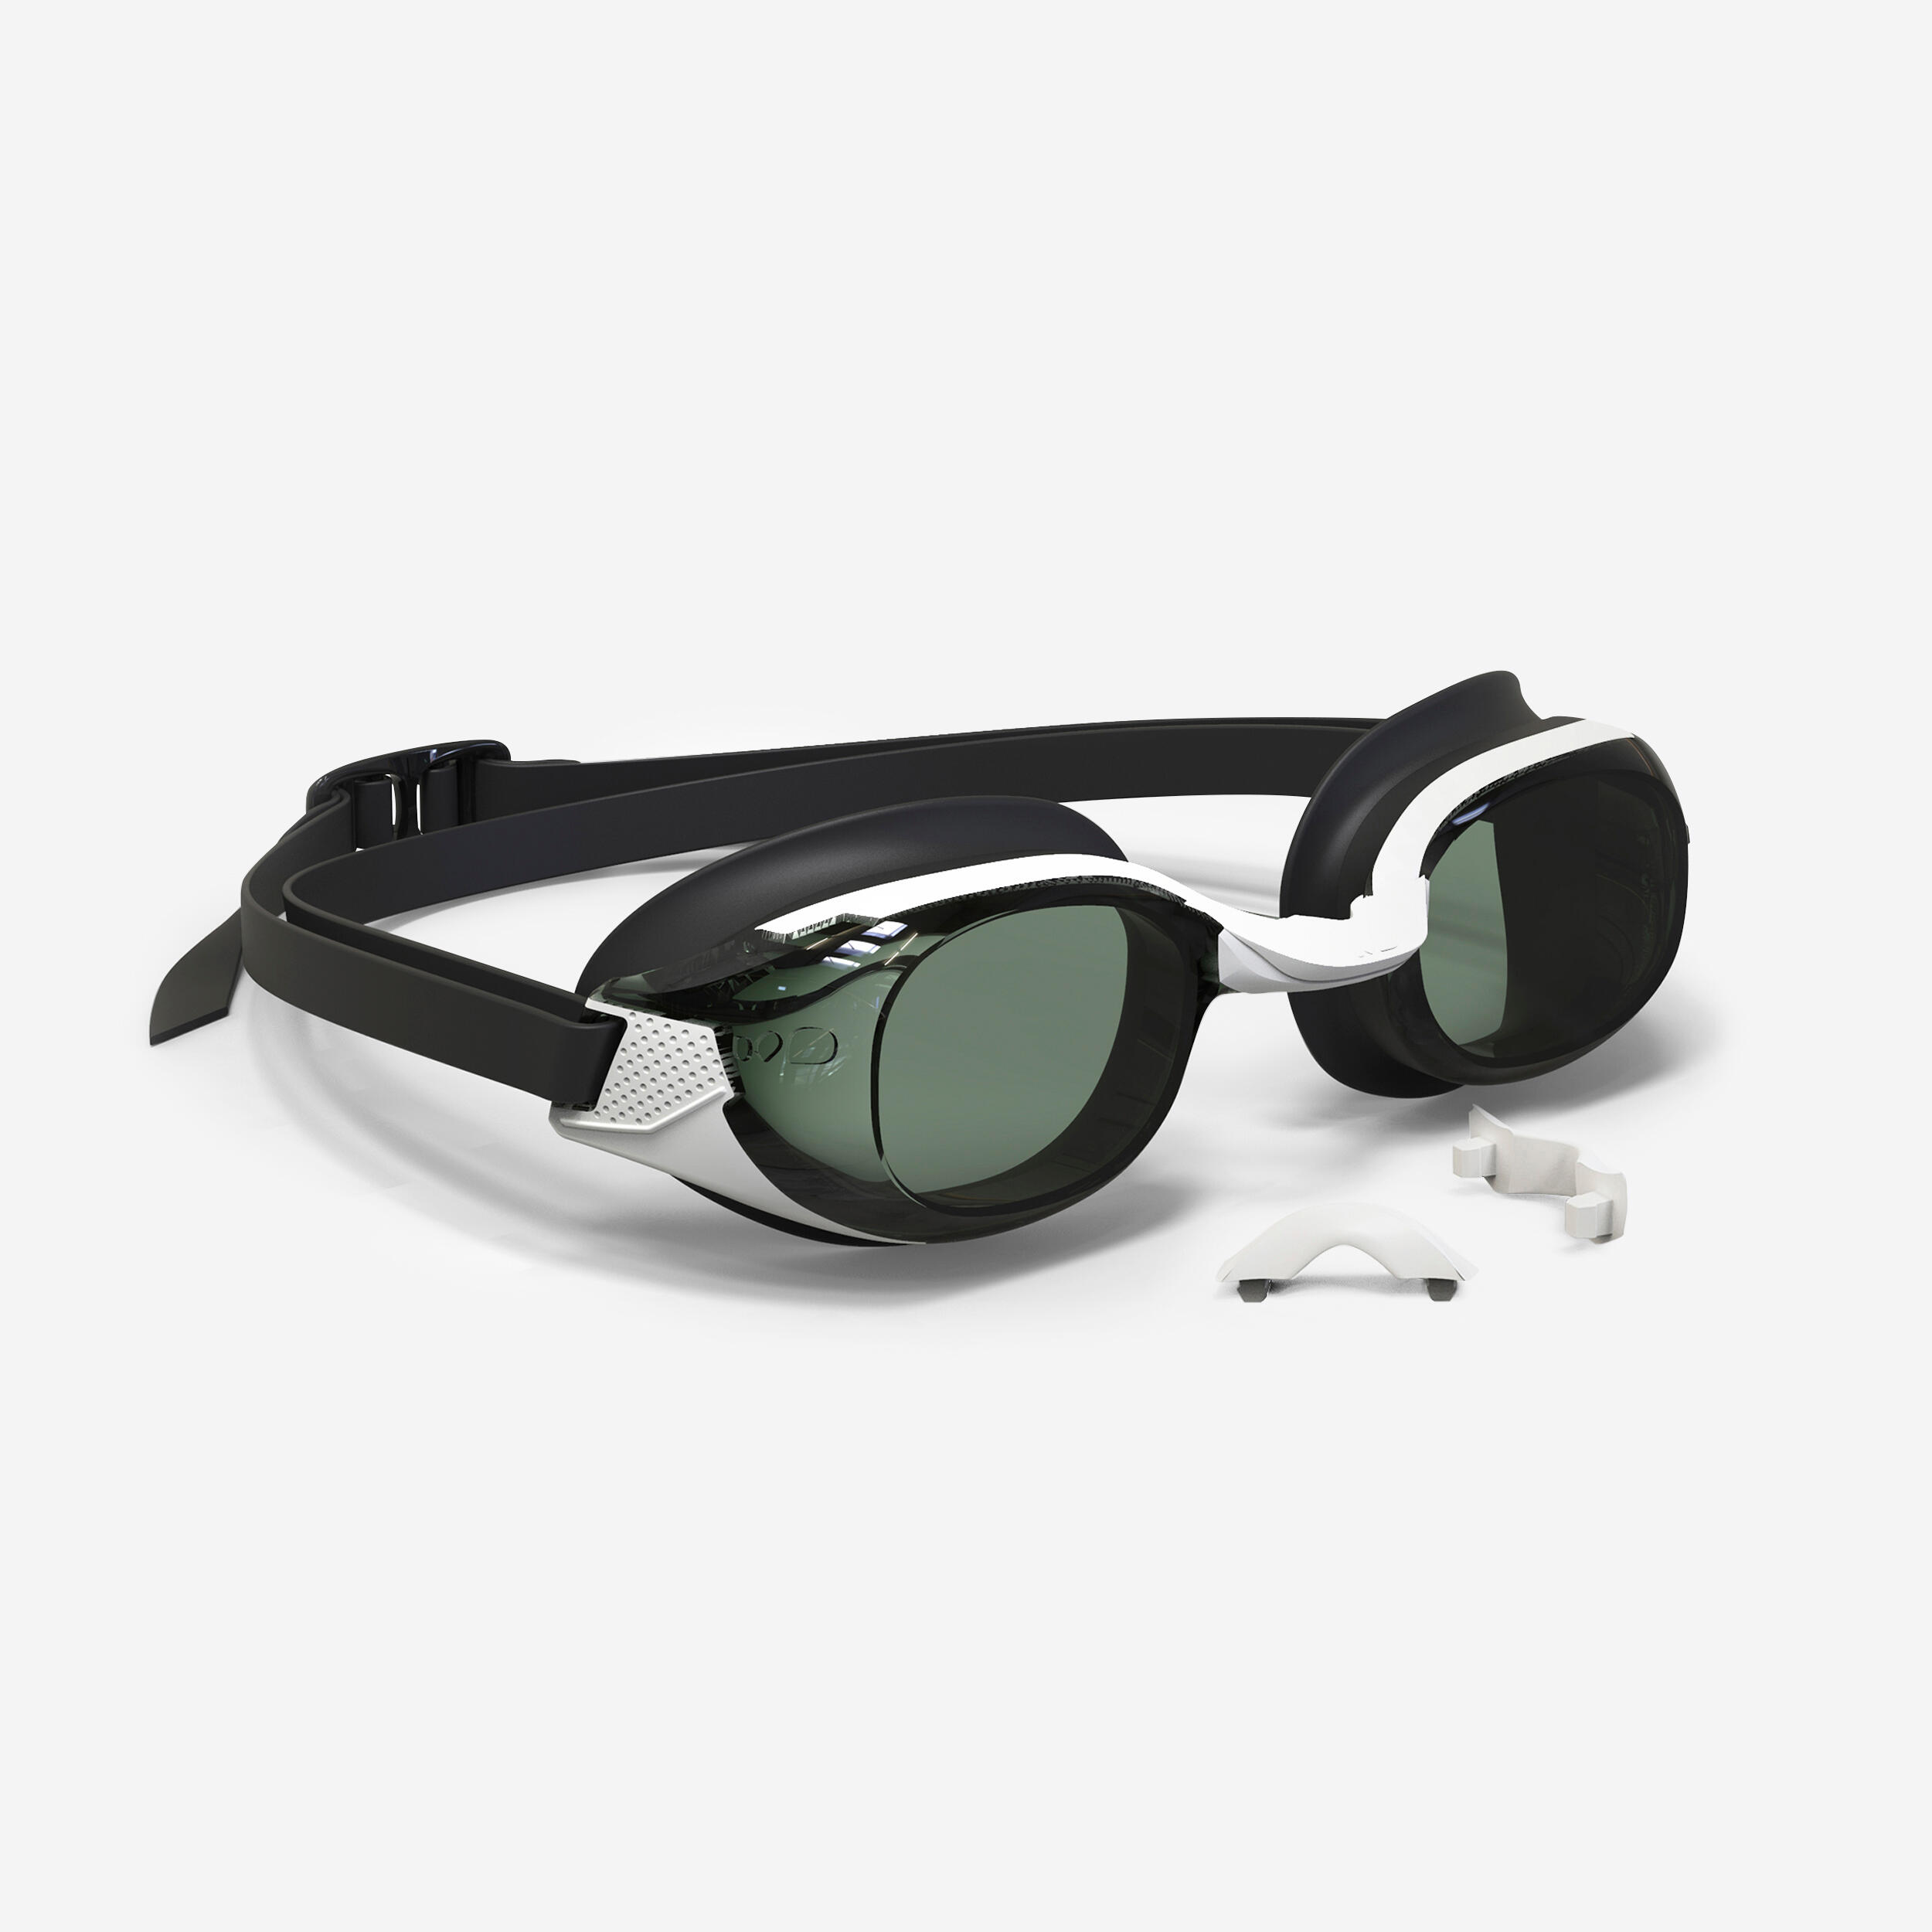 NABAIJI BFIT swimming goggles - Smoked lenses - Single size - Black white